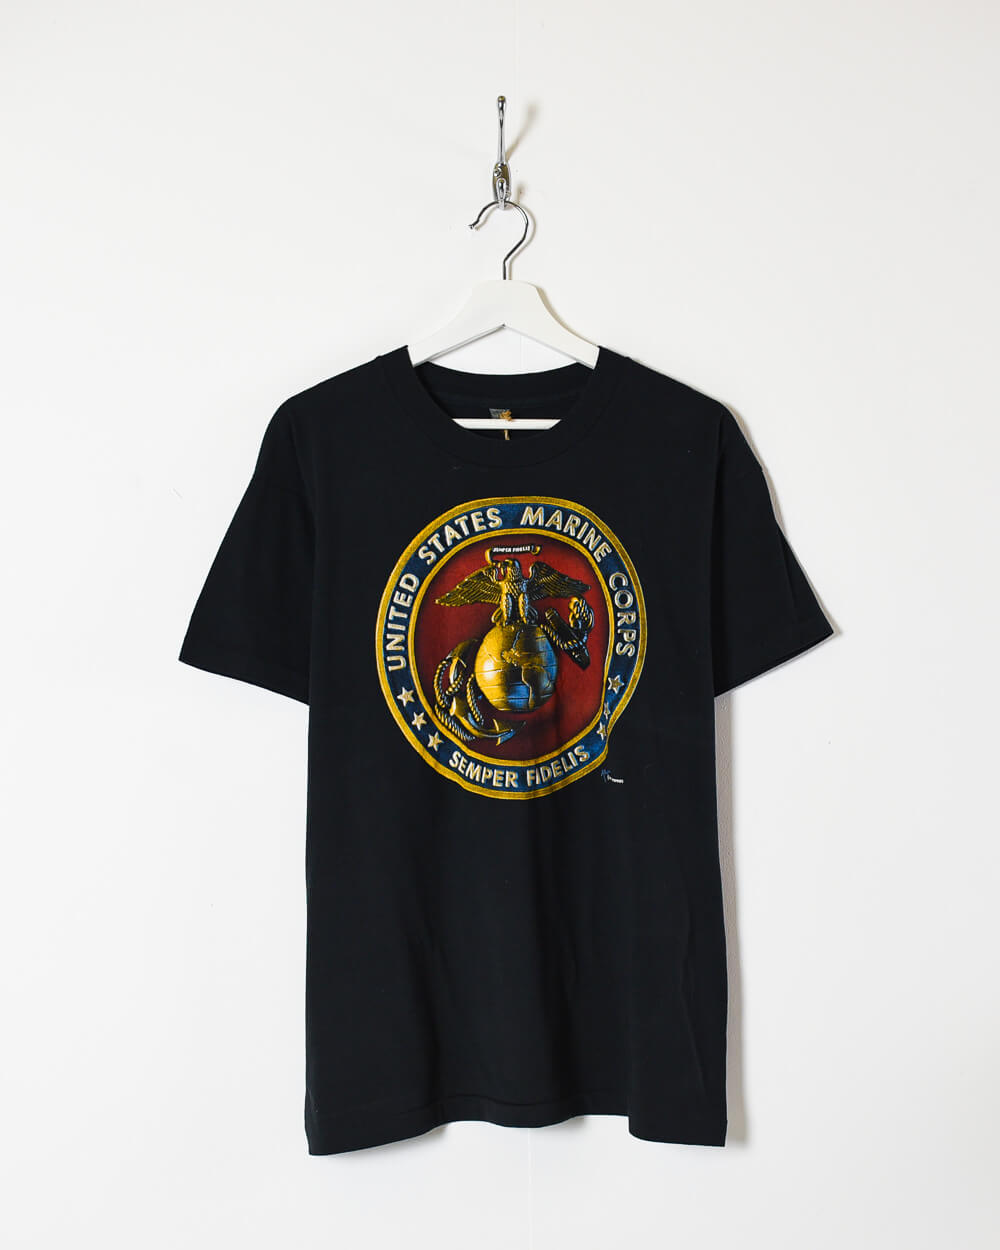 Black Semper Fidelis United States Marine Corps T-Shirt - Small